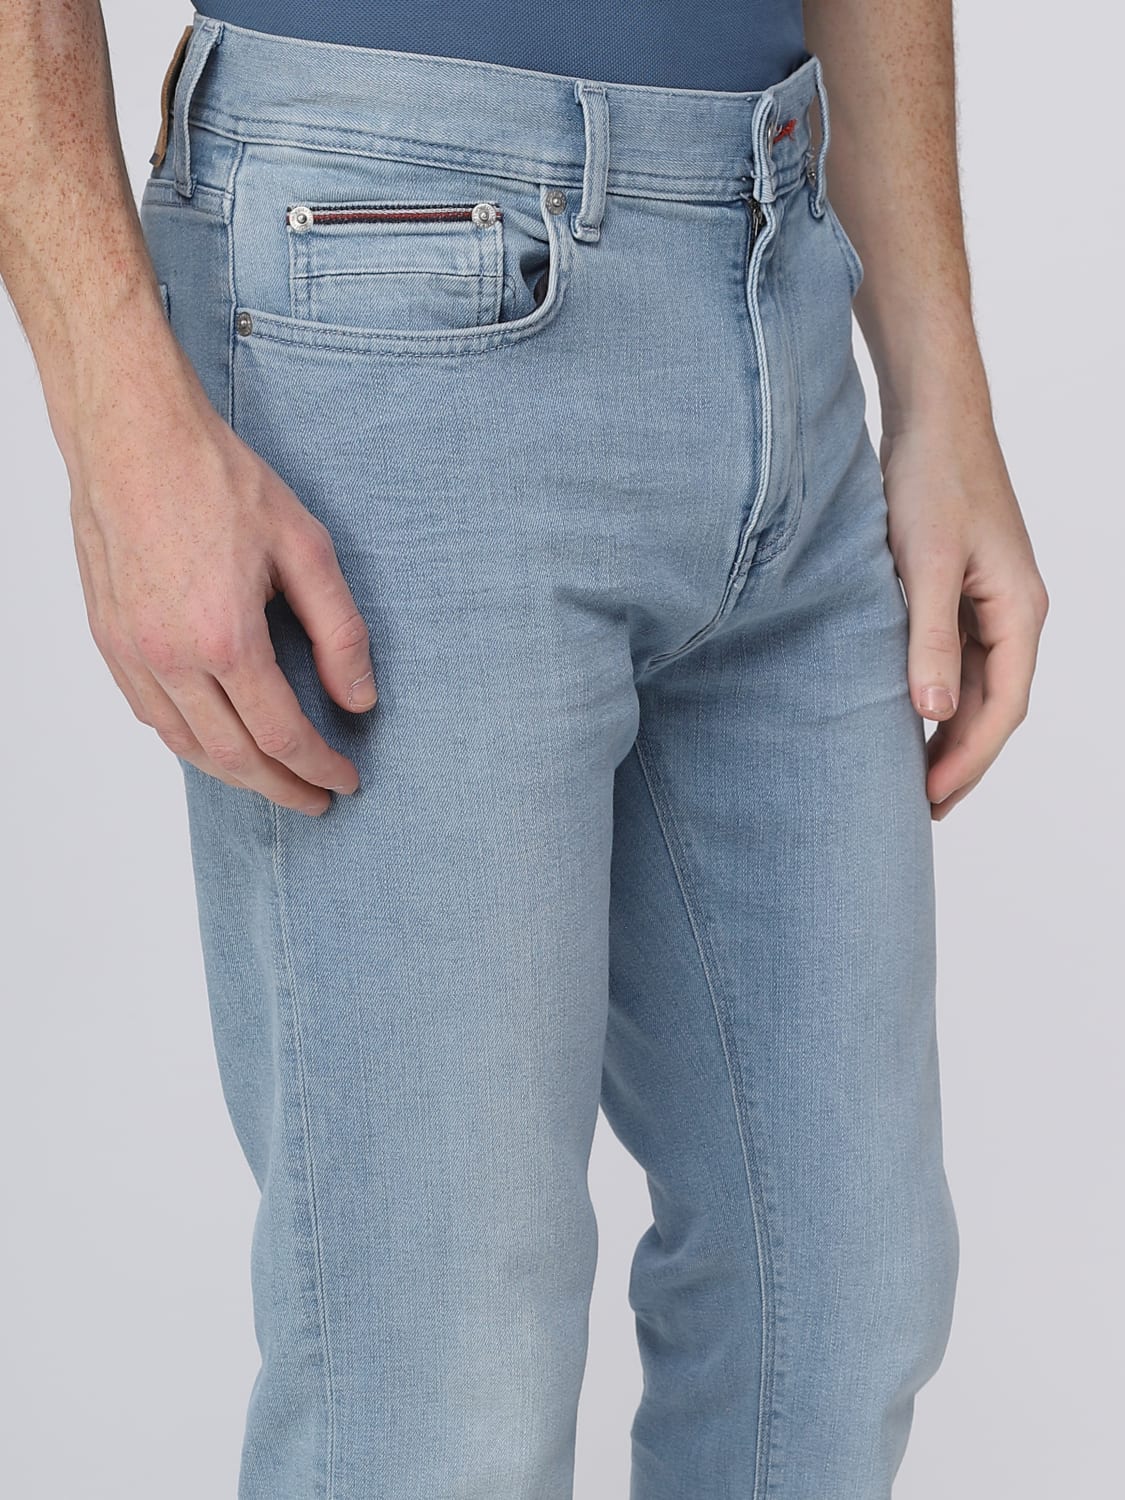 TOMMY HILFIGER: jeans for man Denim | Tommy Hilfiger jeans MW0MW31095 online at GIGLIO.COM